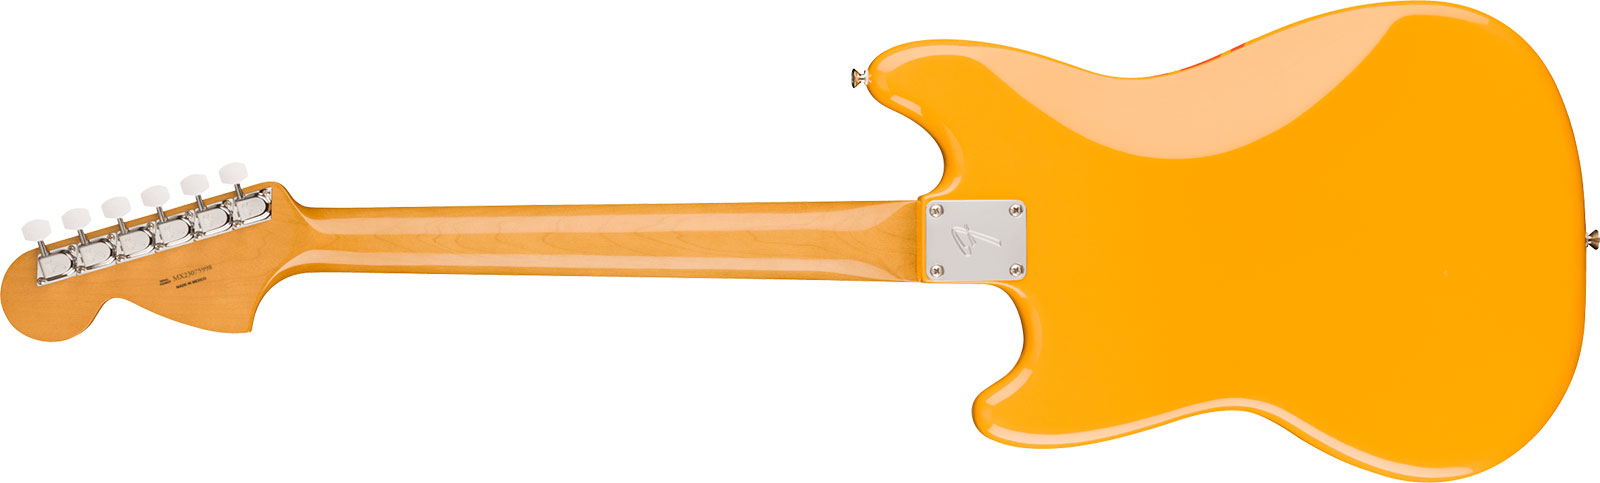 Fender Mustang 70s Competition Vintera 2 Mex 2s Trem Rw - Competition Orange - Retro rock electric guitar - Variation 1